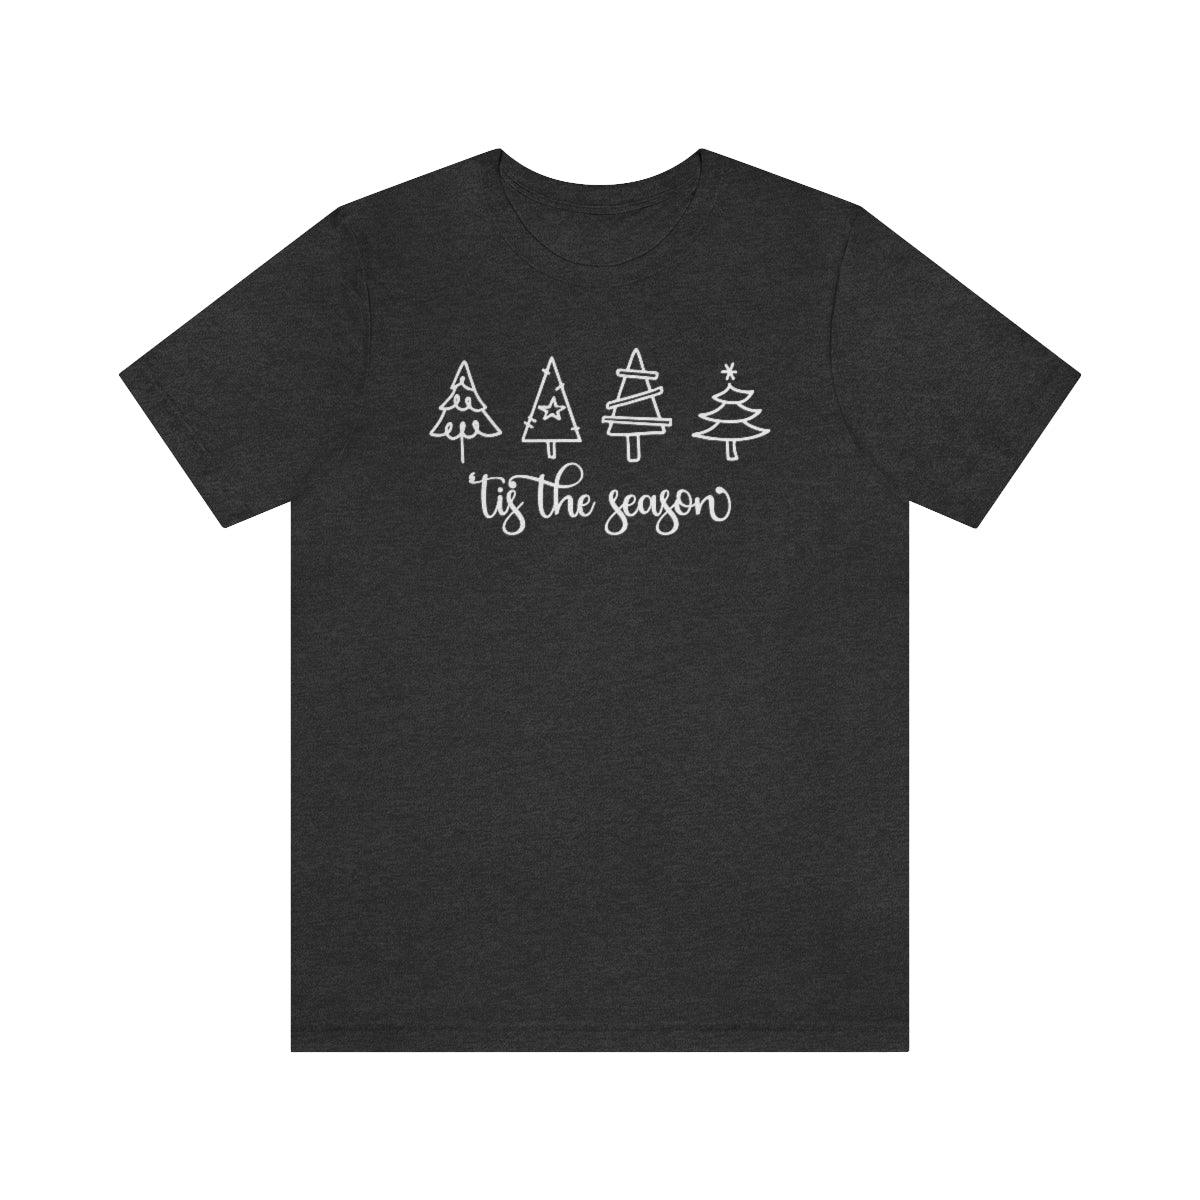 Tis The Season Trees Christmas Shirt Short Sleeve Tee